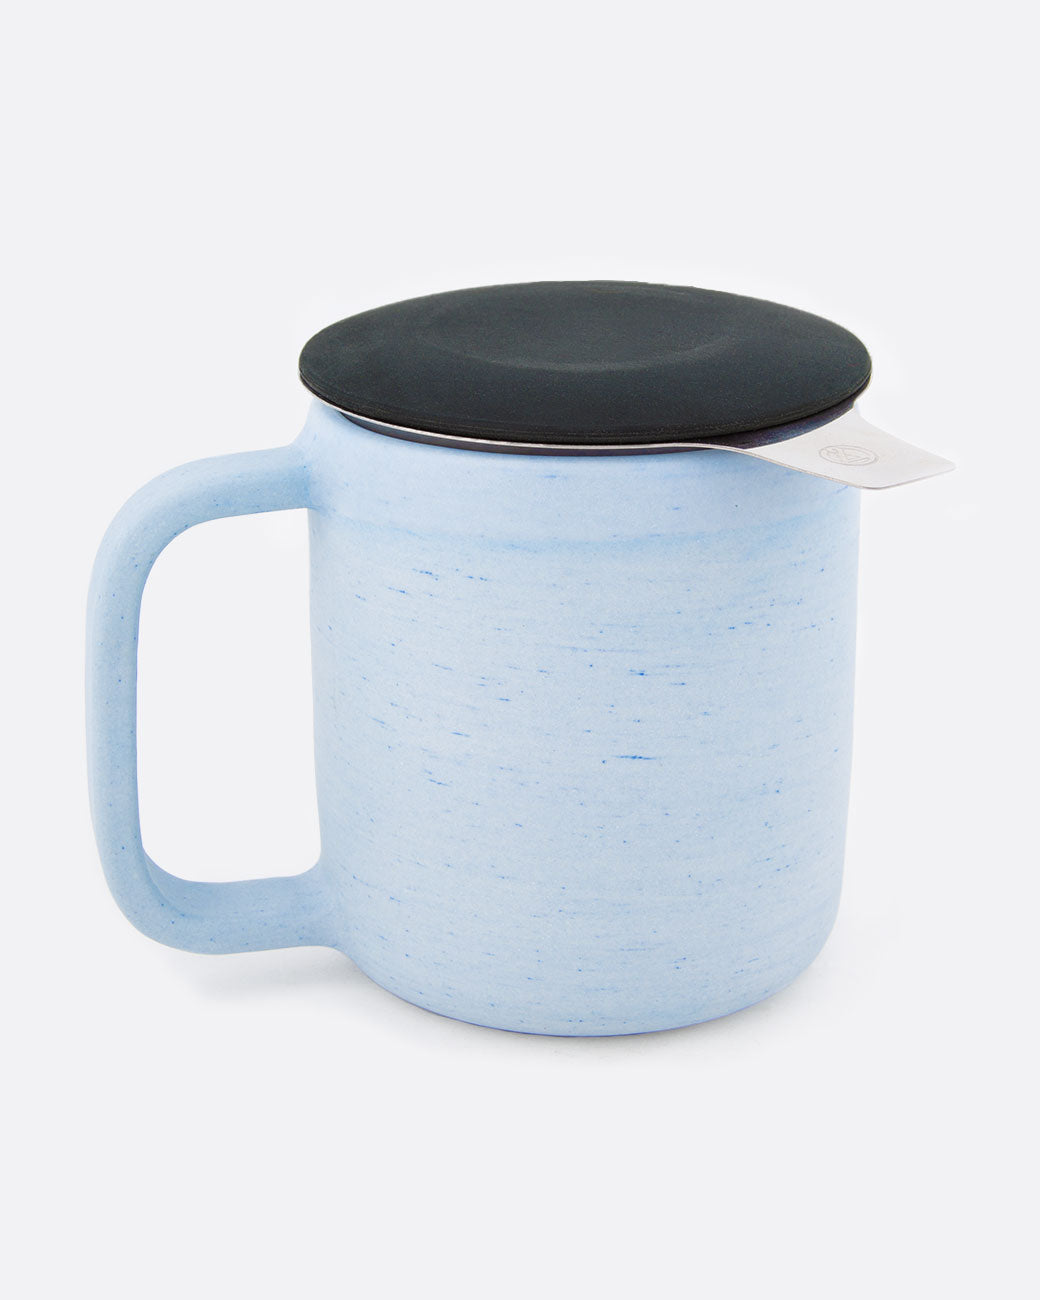 Blue mug with tea diffuser inside.